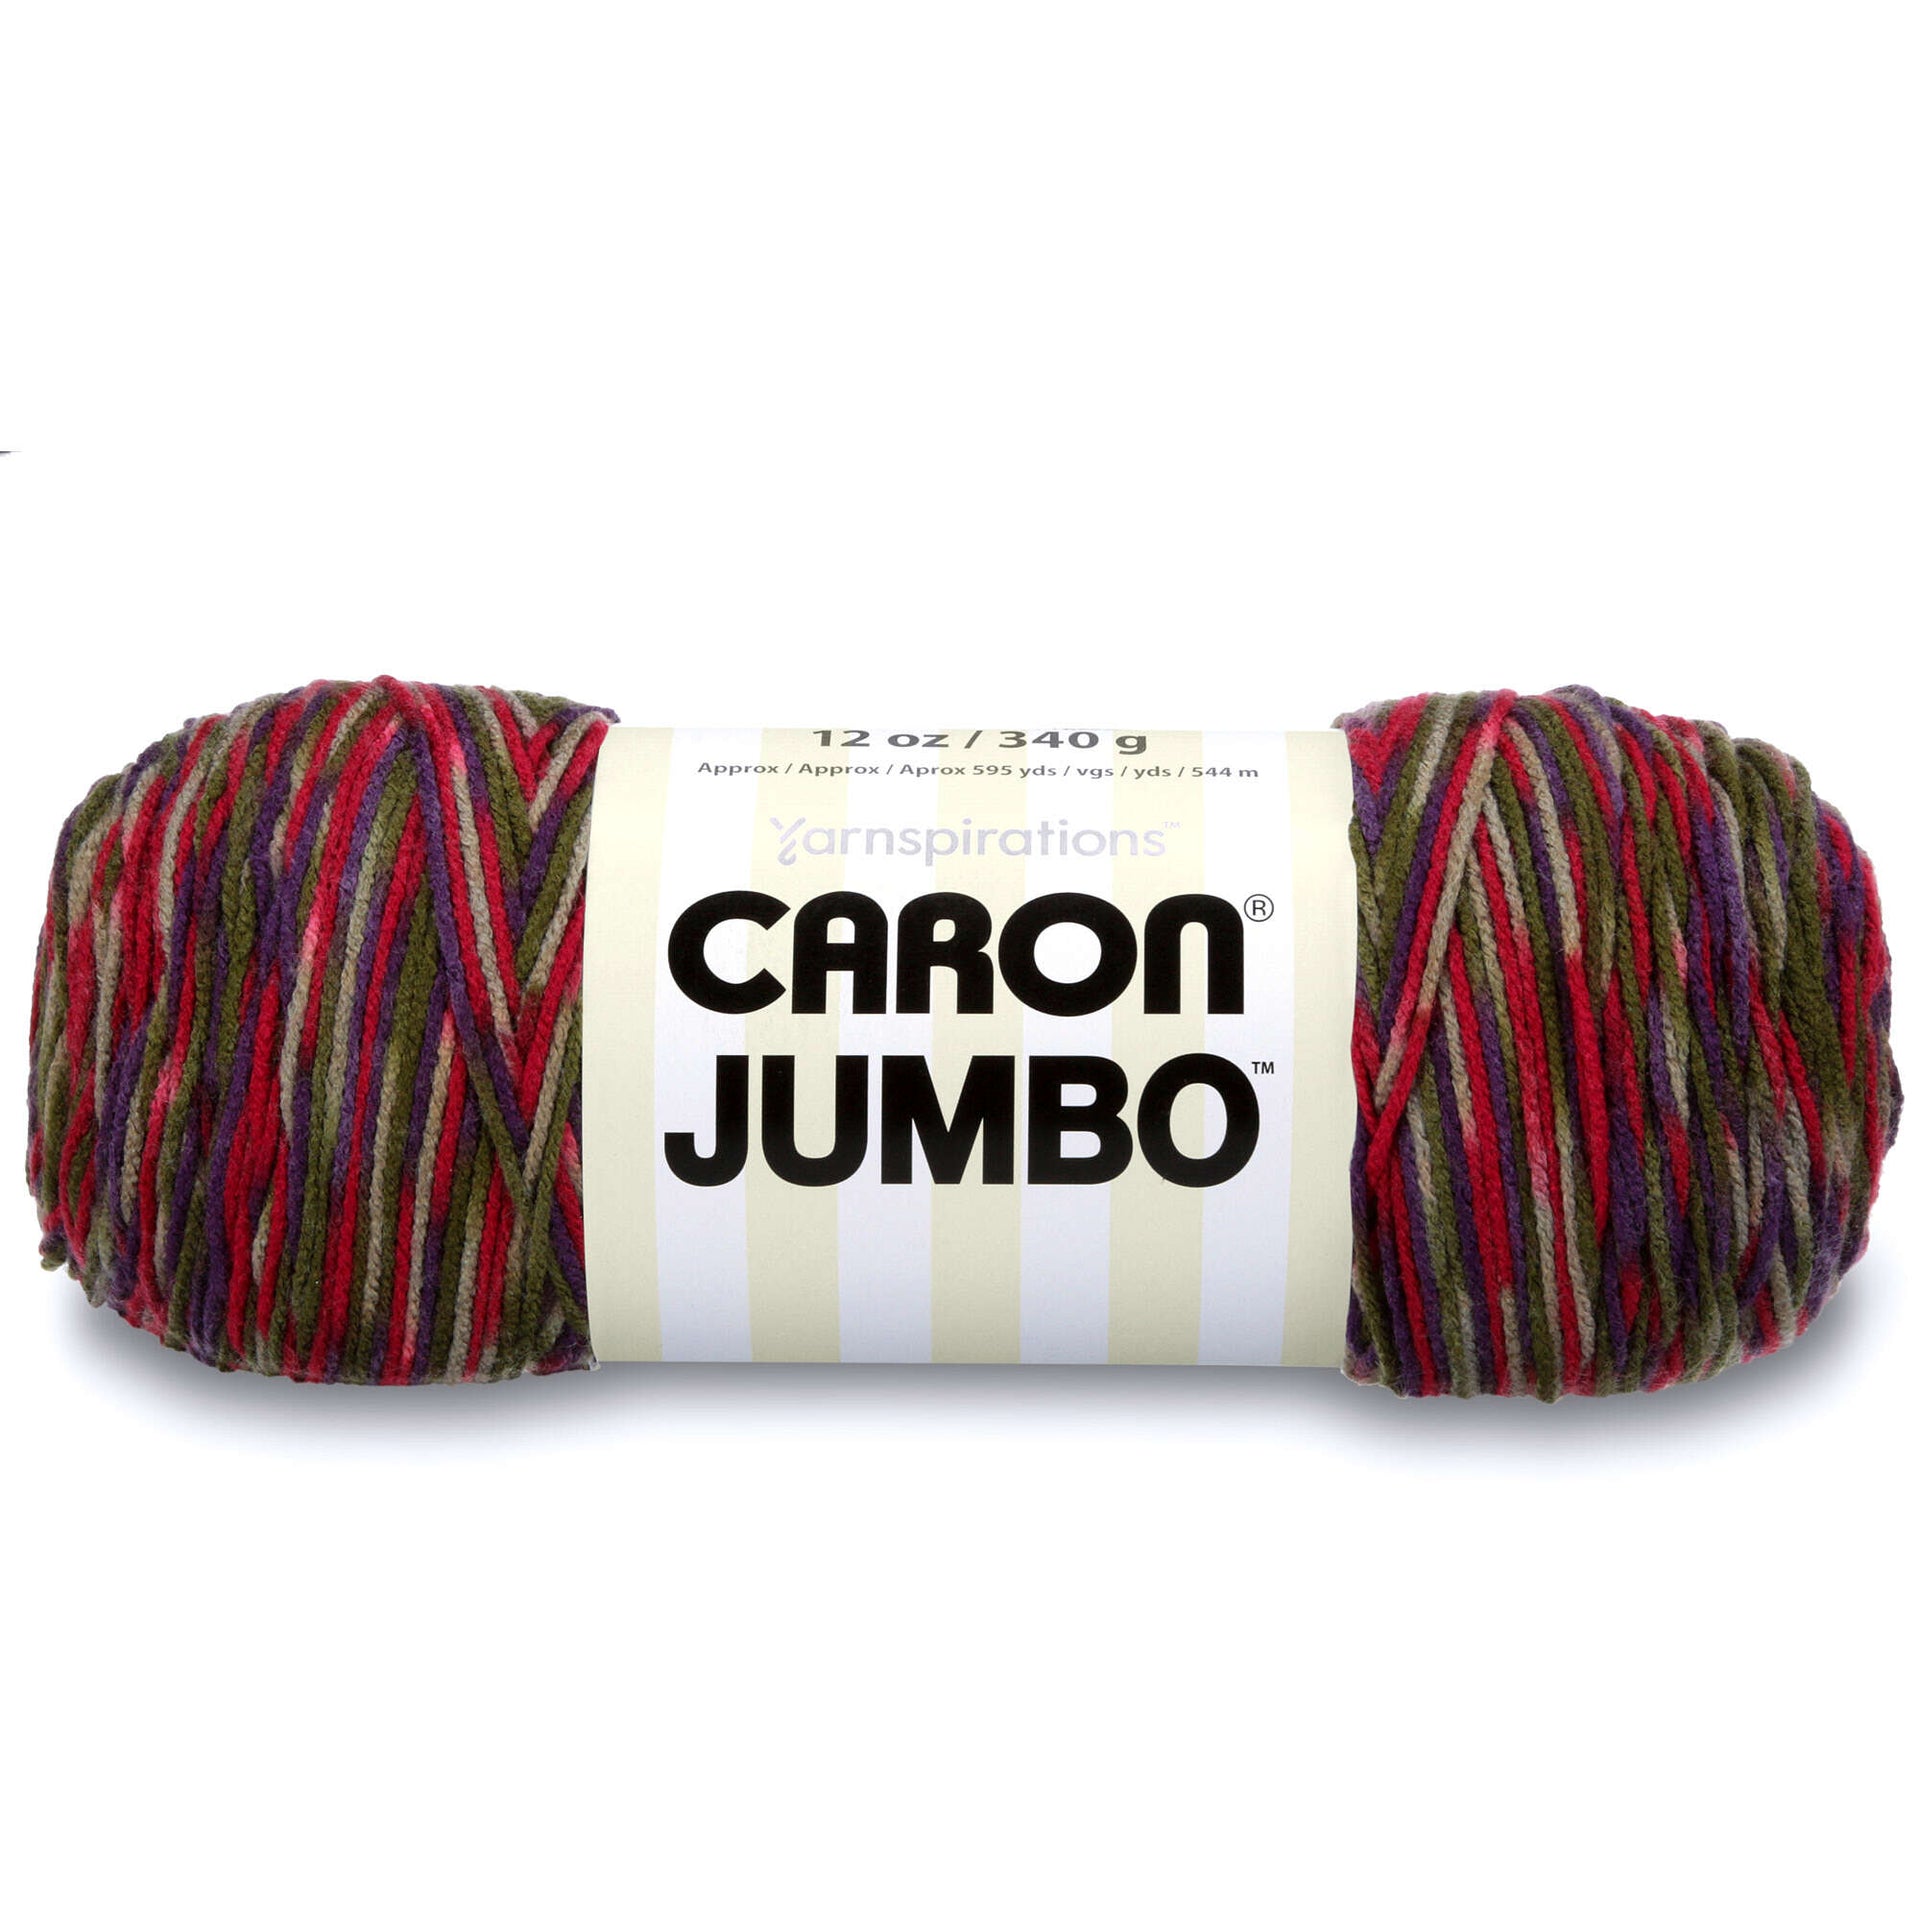 What To Do With Caron Jumbo Yarn